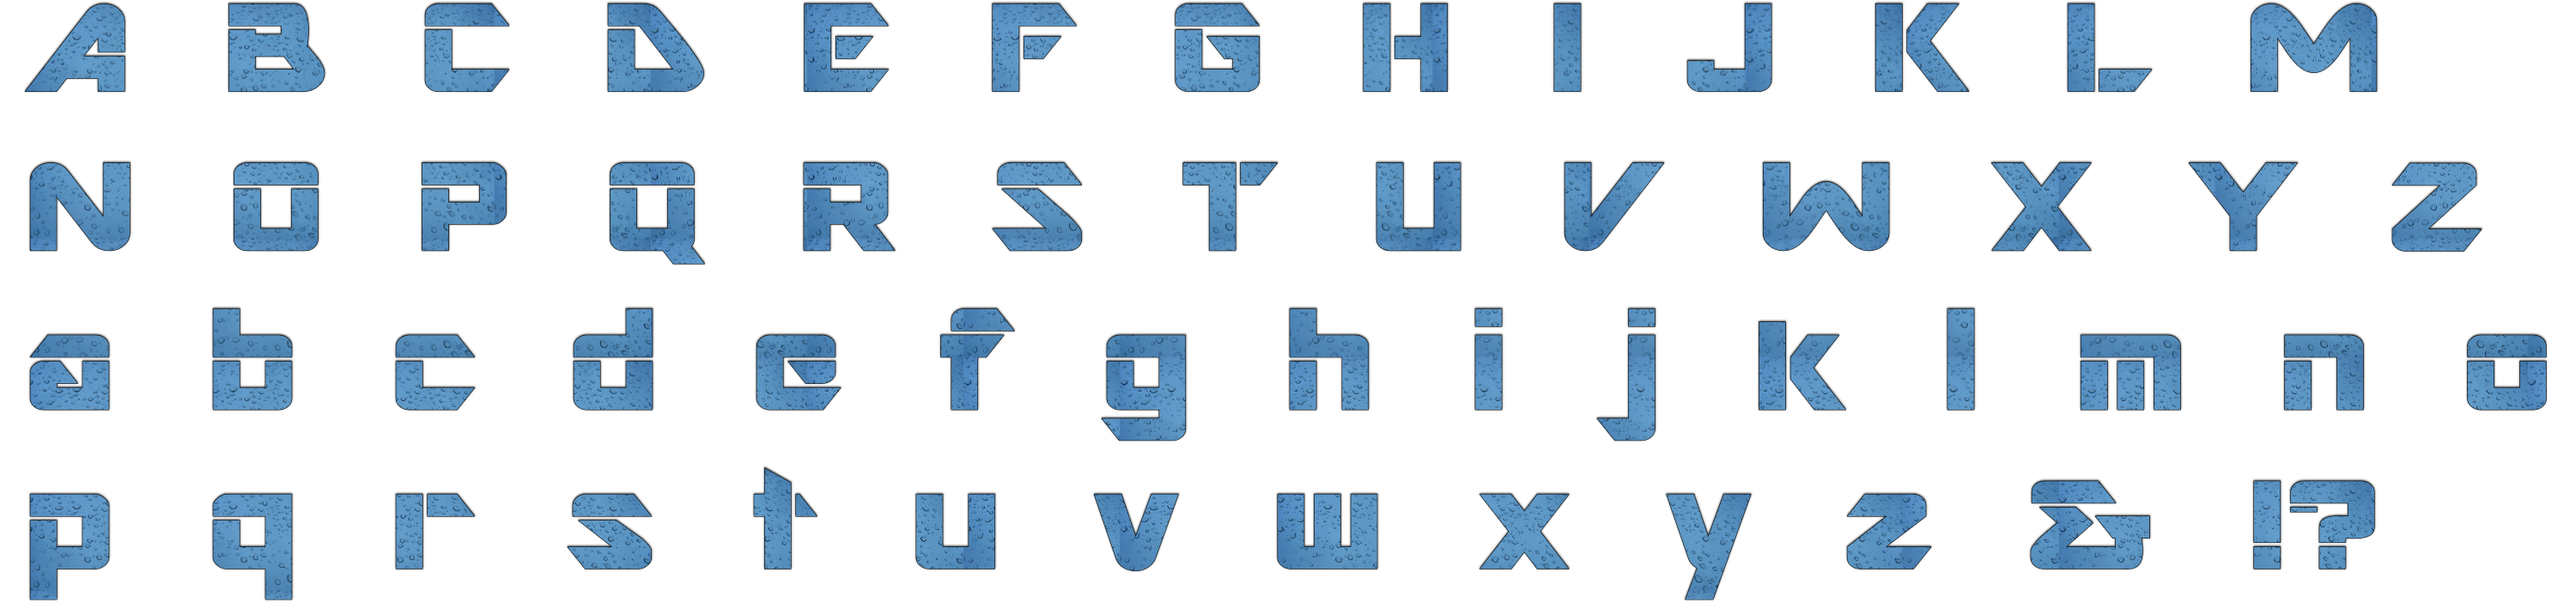 A bis Z Alphabet PNG Free Download